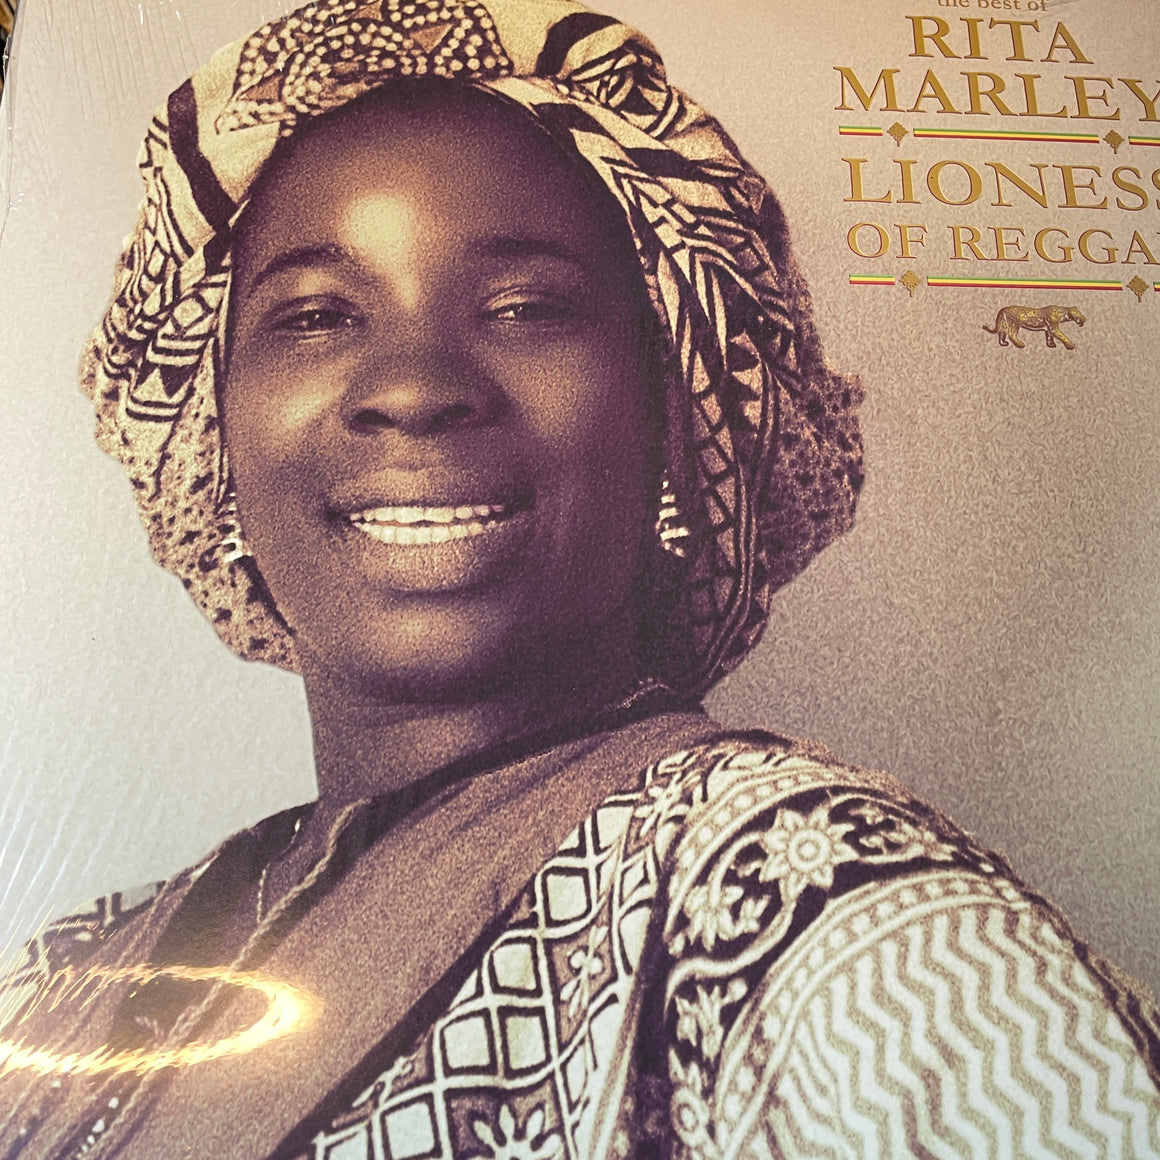 Rita Marley Lioness Of Reggae New Vinyl LP M\M